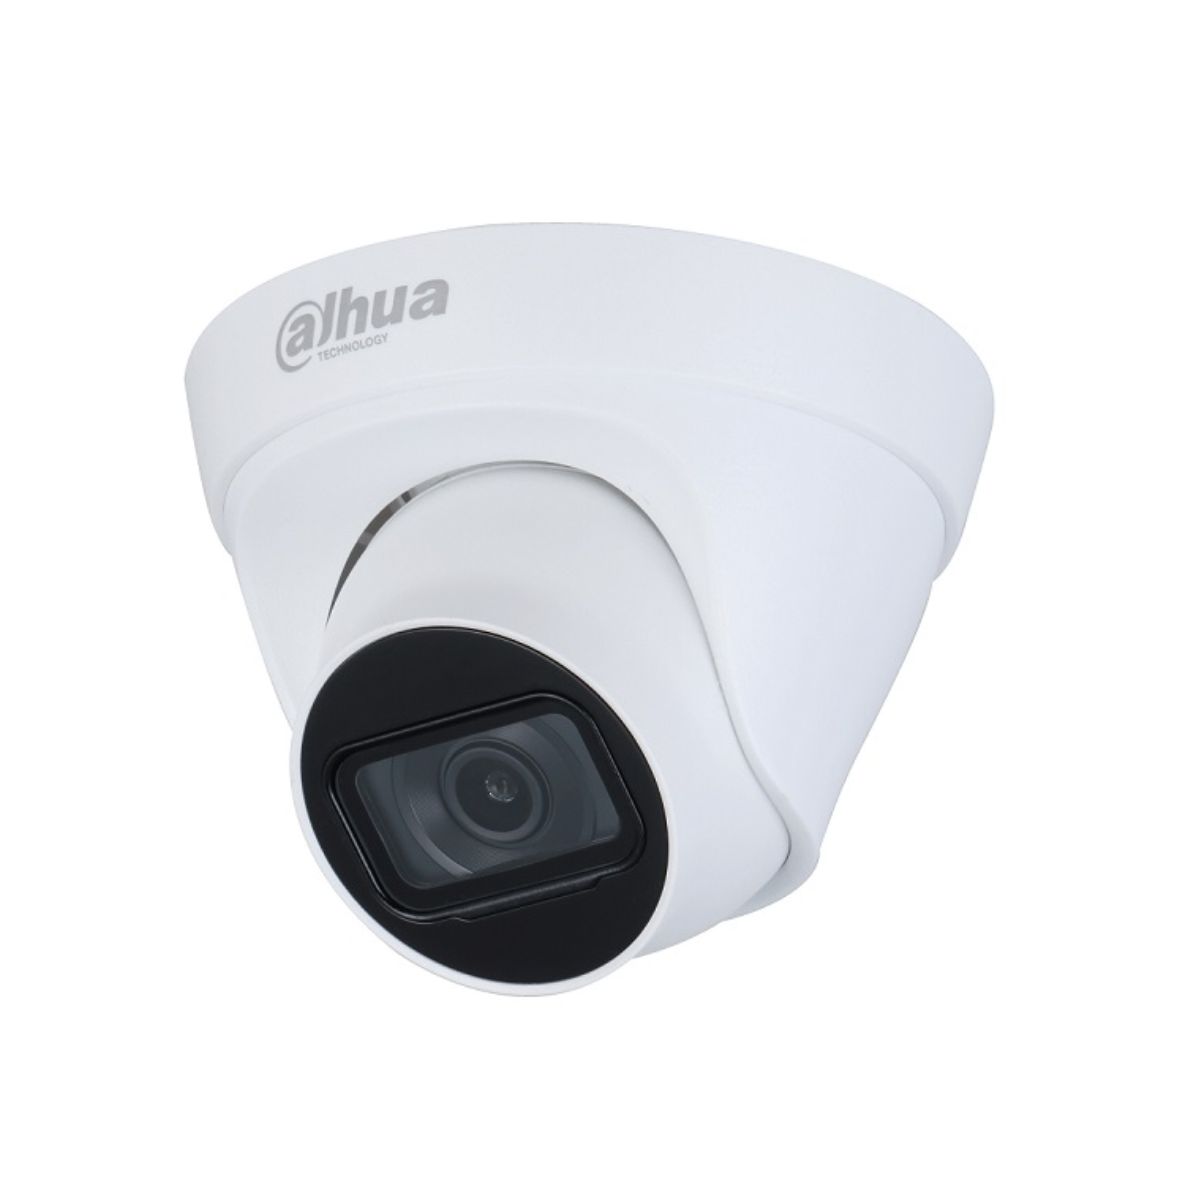 Camera Dome 2MP Dahua DH-IPC-HDW1230DT1-S5 hồng ngoại 30m, hỗ trợ P2P 